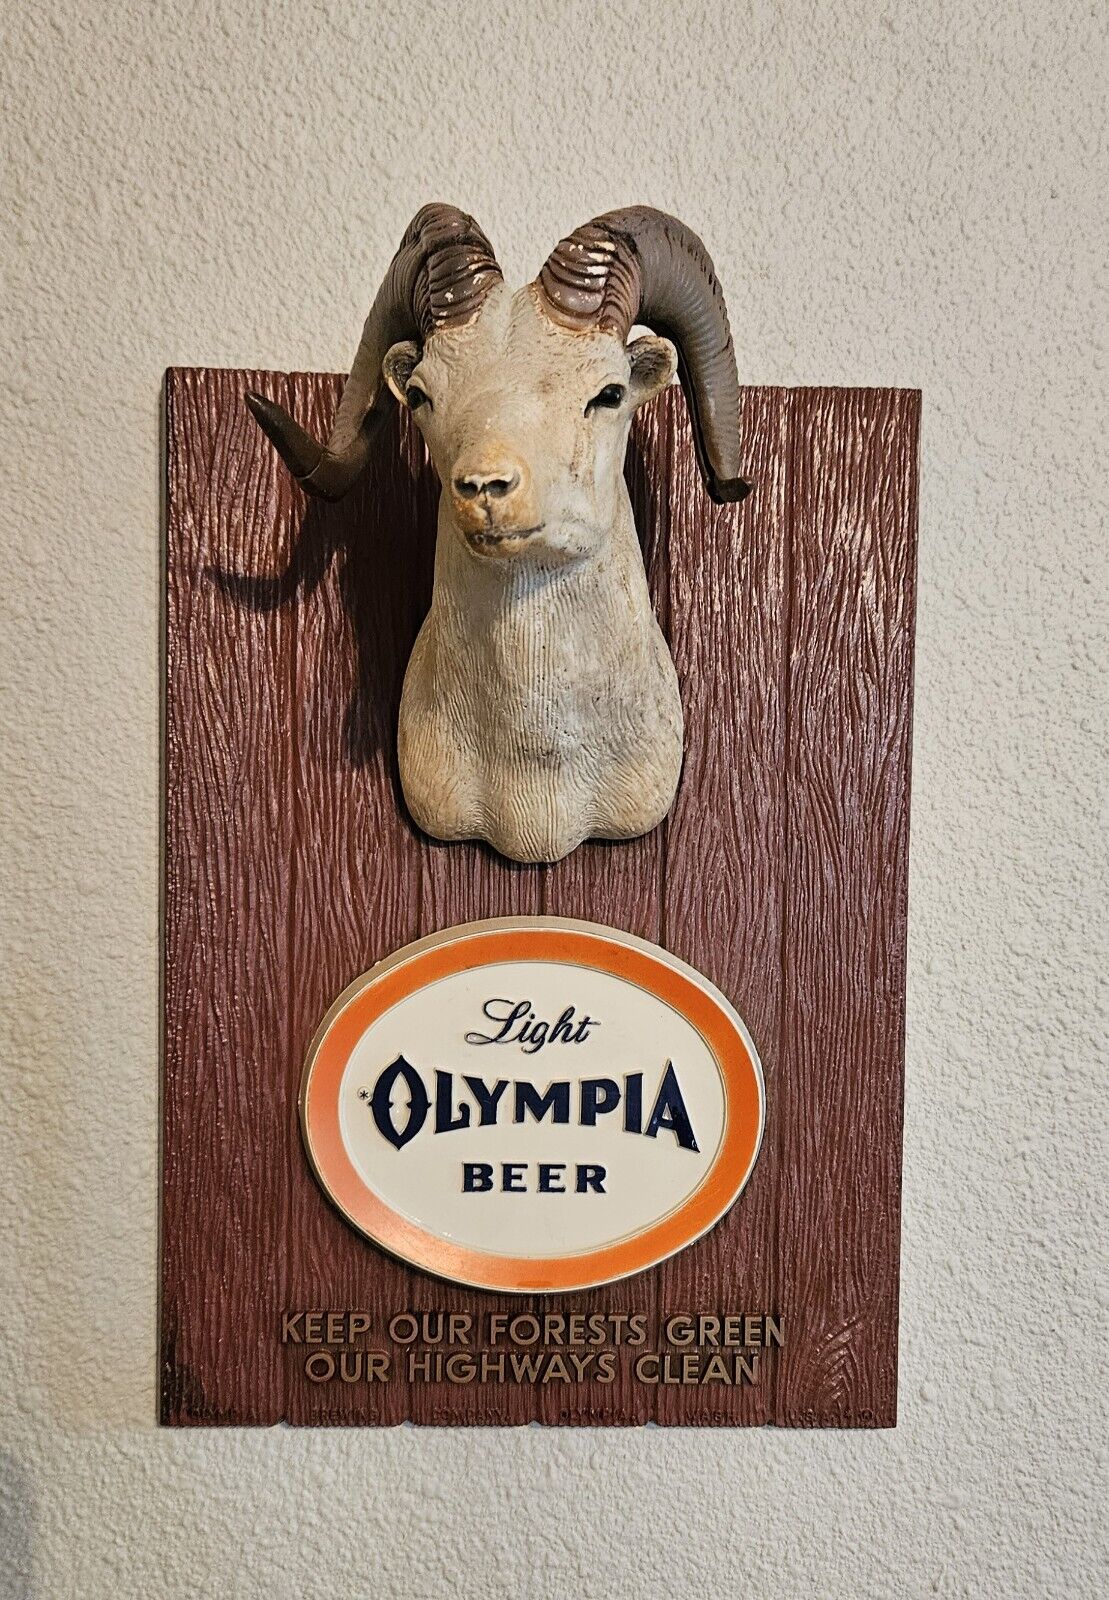 Vintage 1963 Olympia Light Beer Ram Sheep Wildlife Wall Bar Sign Plaque. Rare 